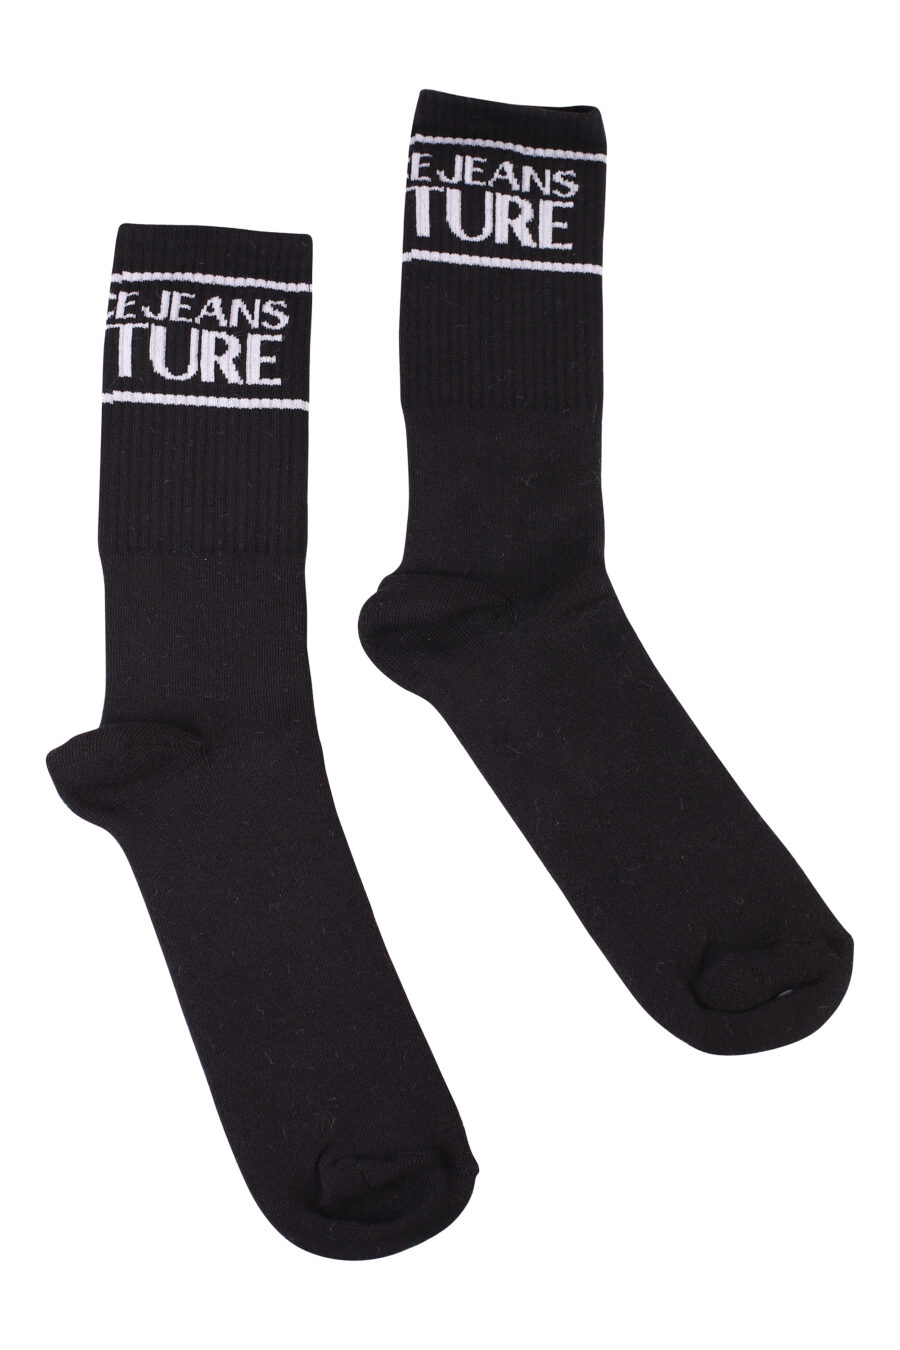 Chaussettes noires avec logo horizontal blanc - IMG 8545